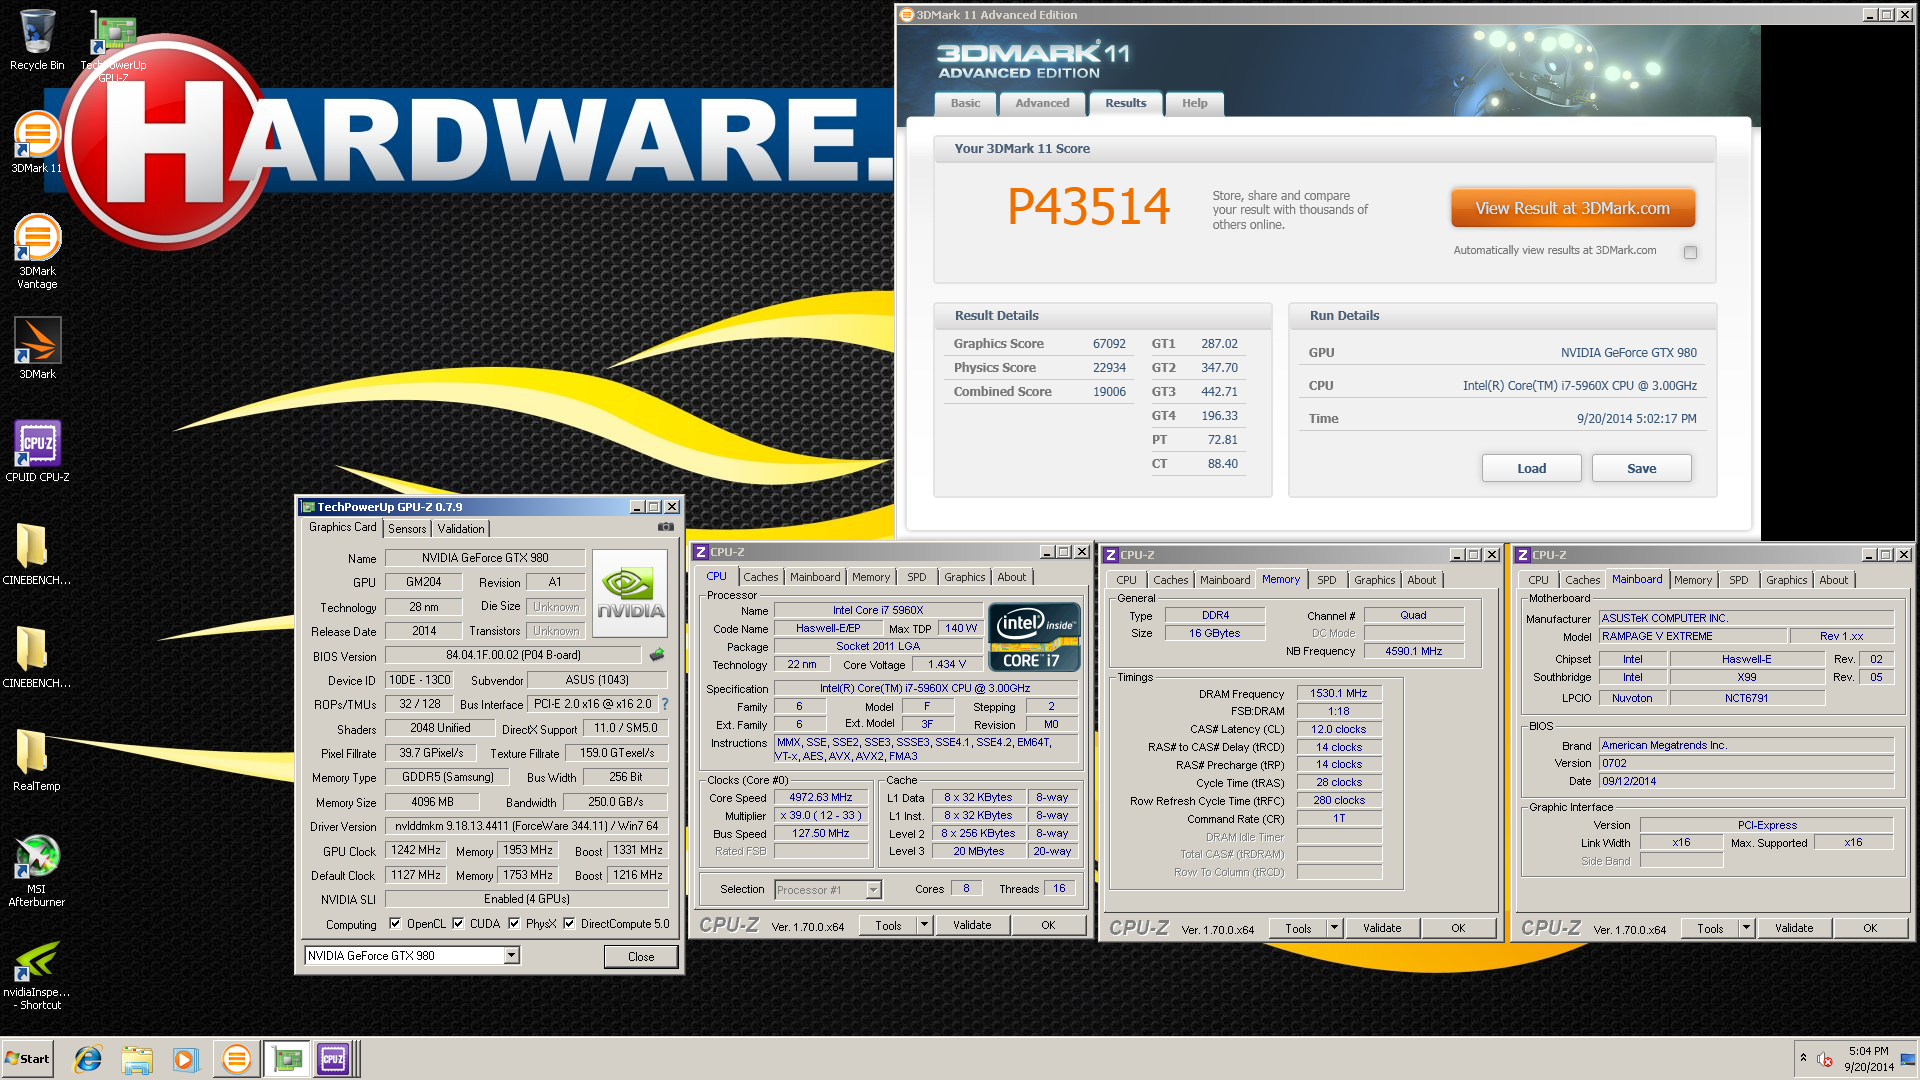 Nvidia GeForce GTX 980 world record 4-way SLI ASUS Tones screenshot